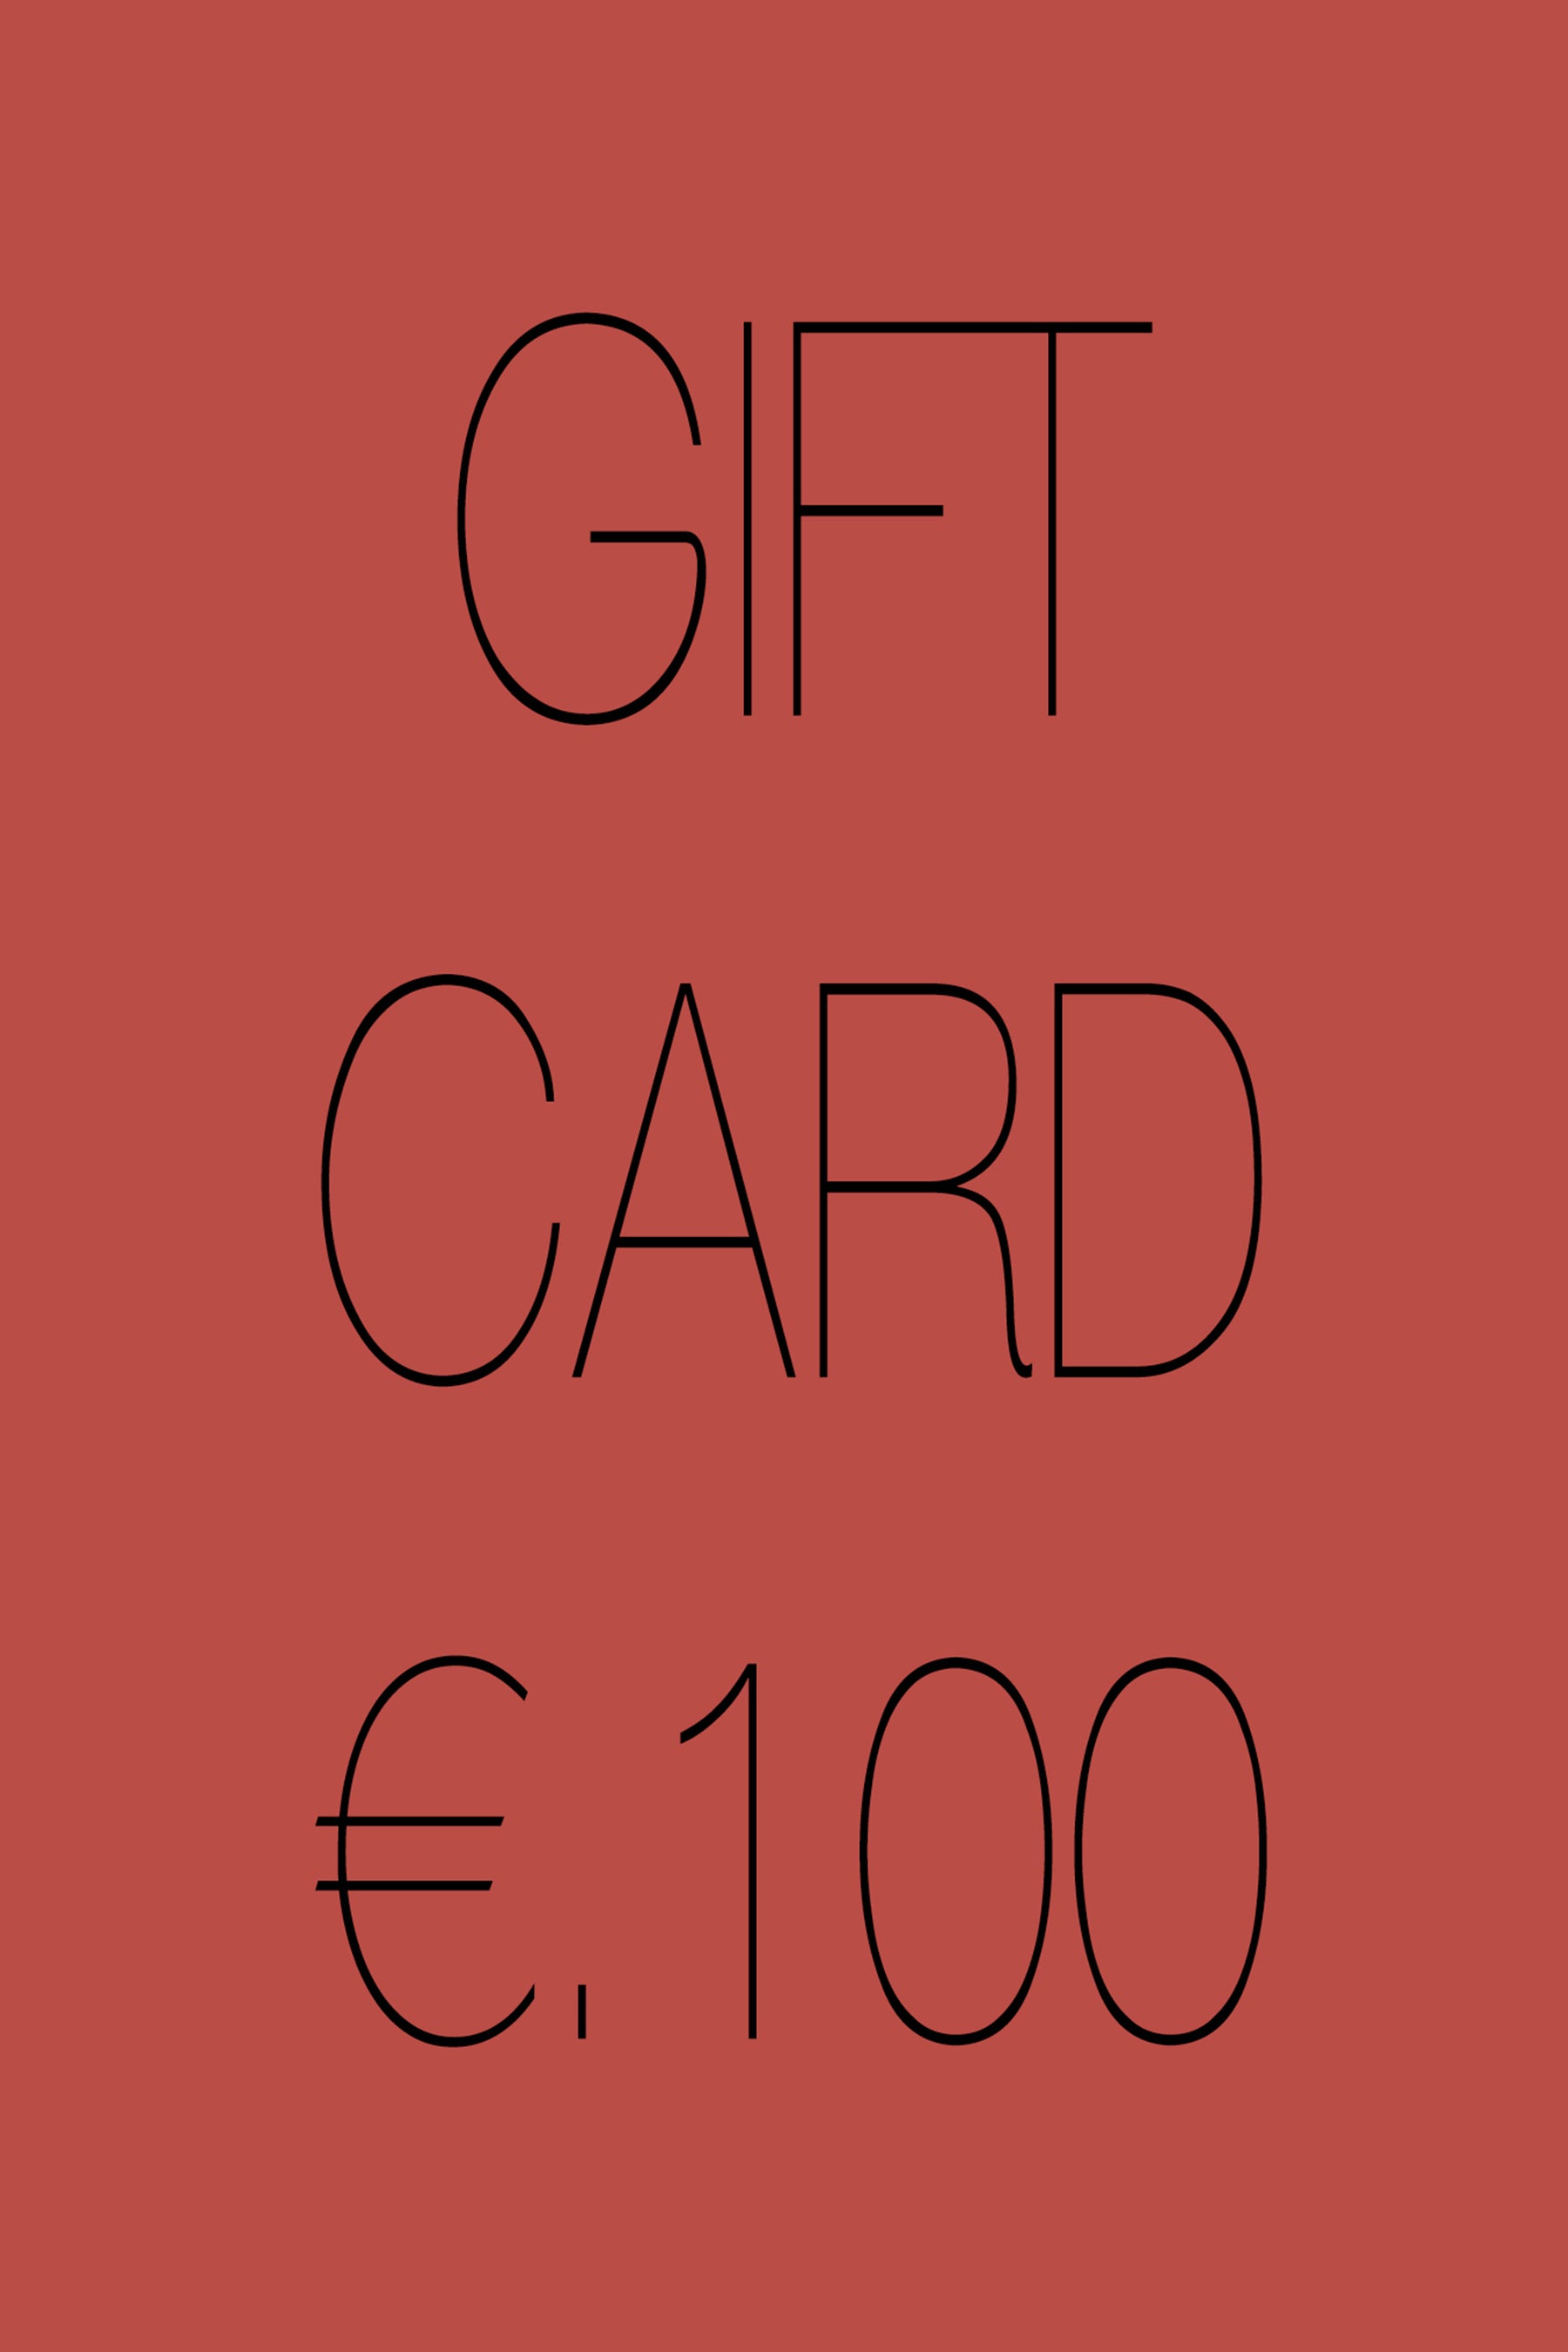 GIFT CARD €.100,00